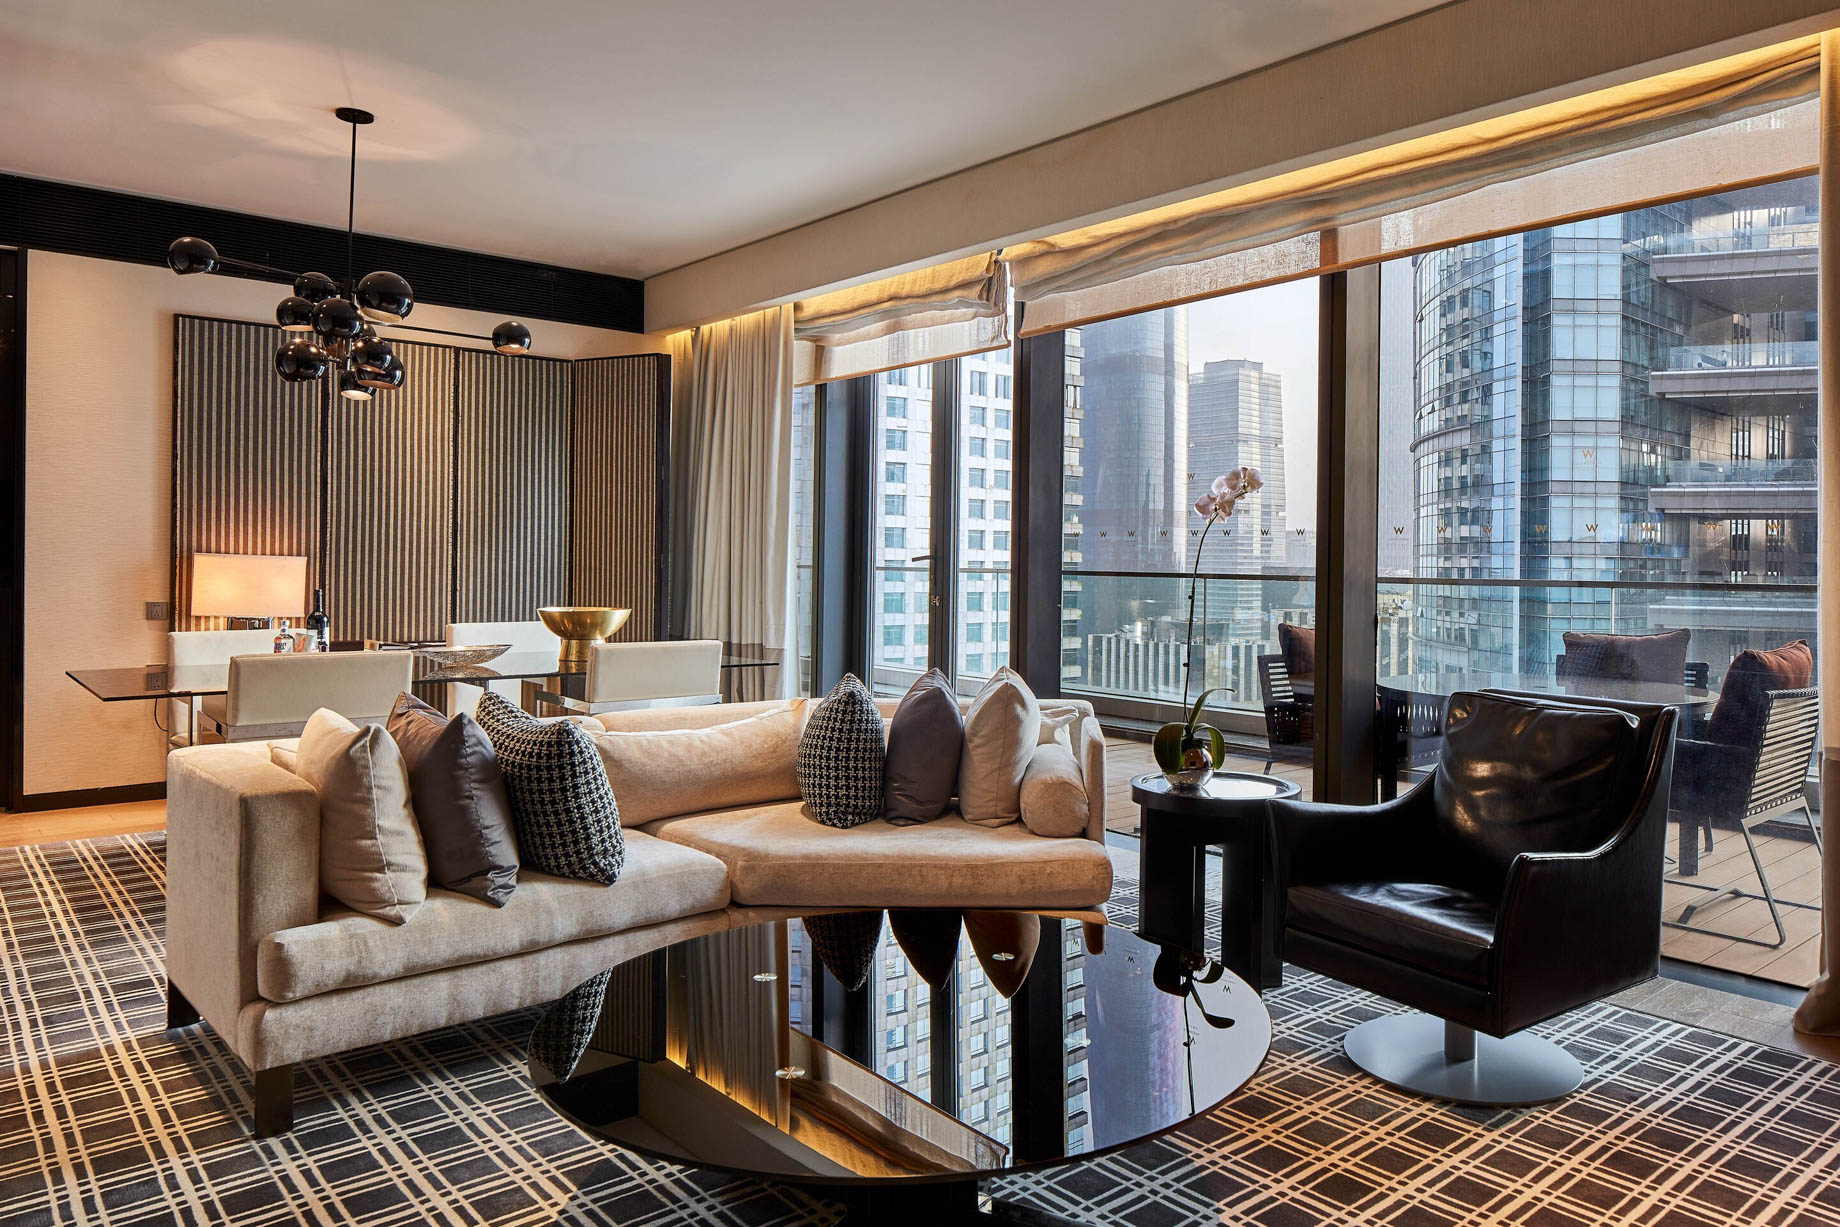 W Guangzhou Hotel – Tianhe District, Guangzhou, China – Marvelous Suite Living Room